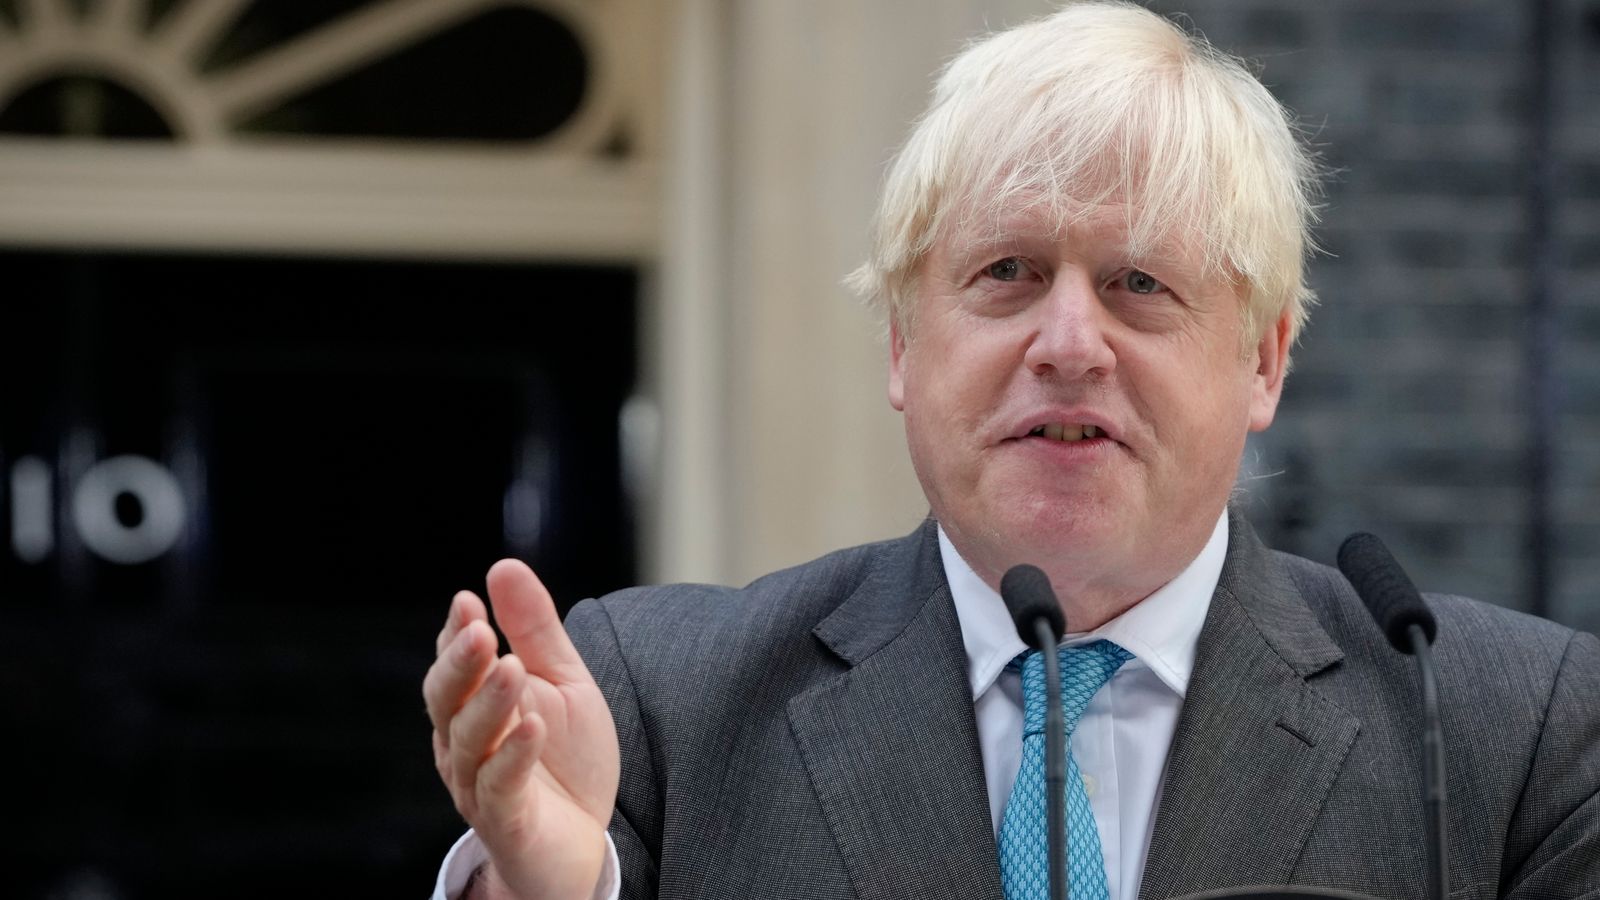 Evidence of market nerves around a return to power for Boris Johnson